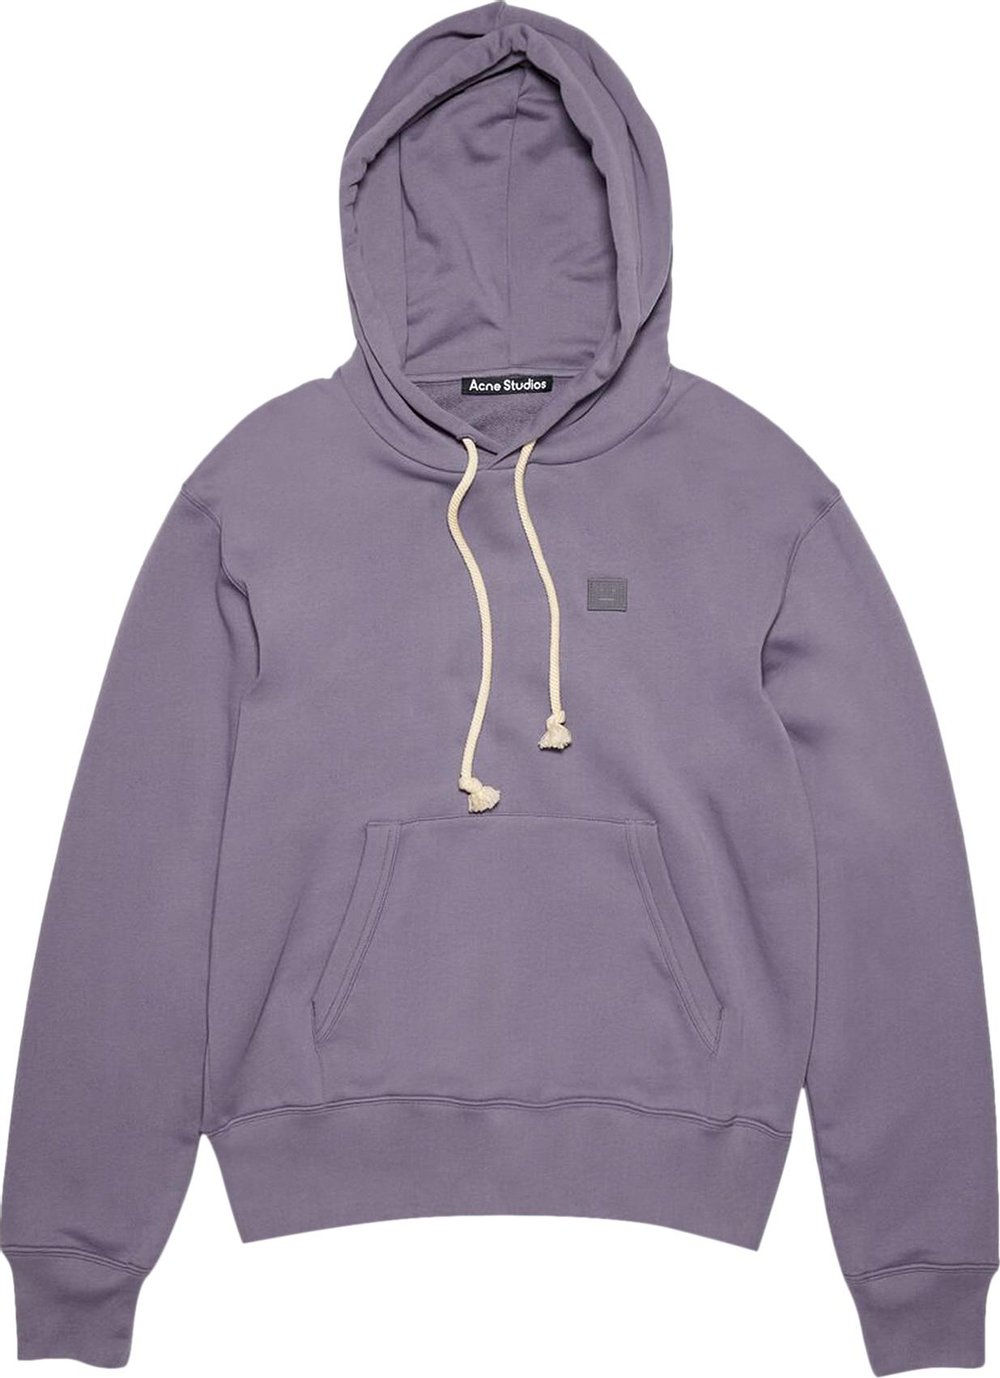 Buy Acne Studios Hooded Sweatshirt 'Faded Purple' - CI0141 GOAT FADE | GOAT